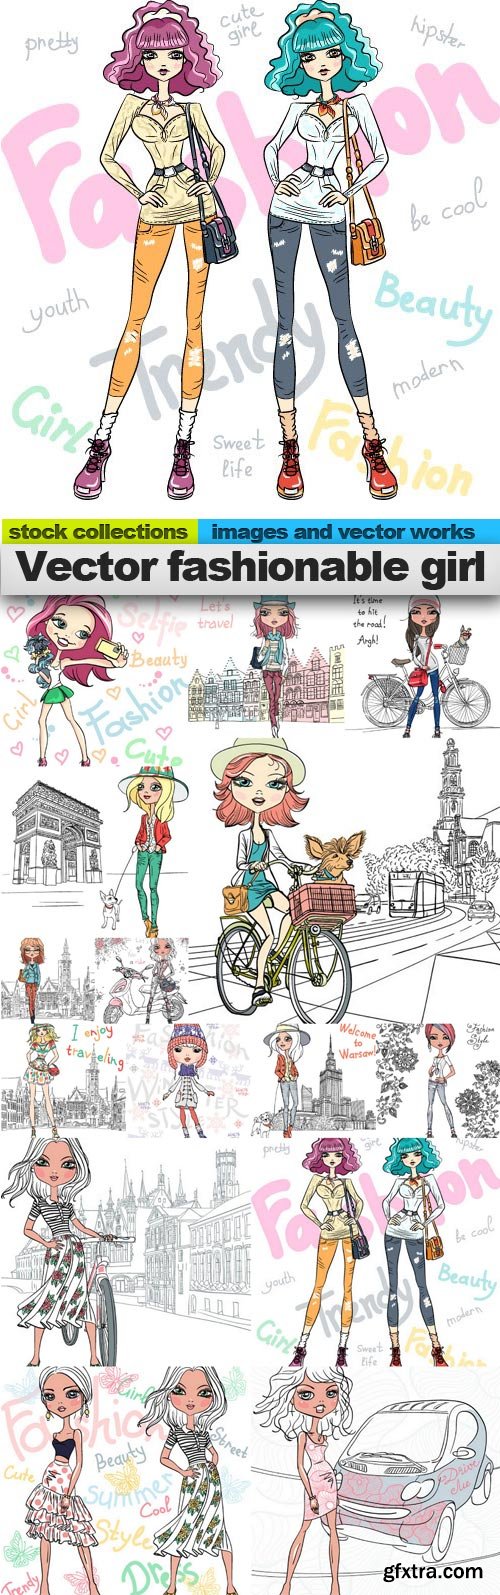 Vector fashionable girl, 15 x EPS